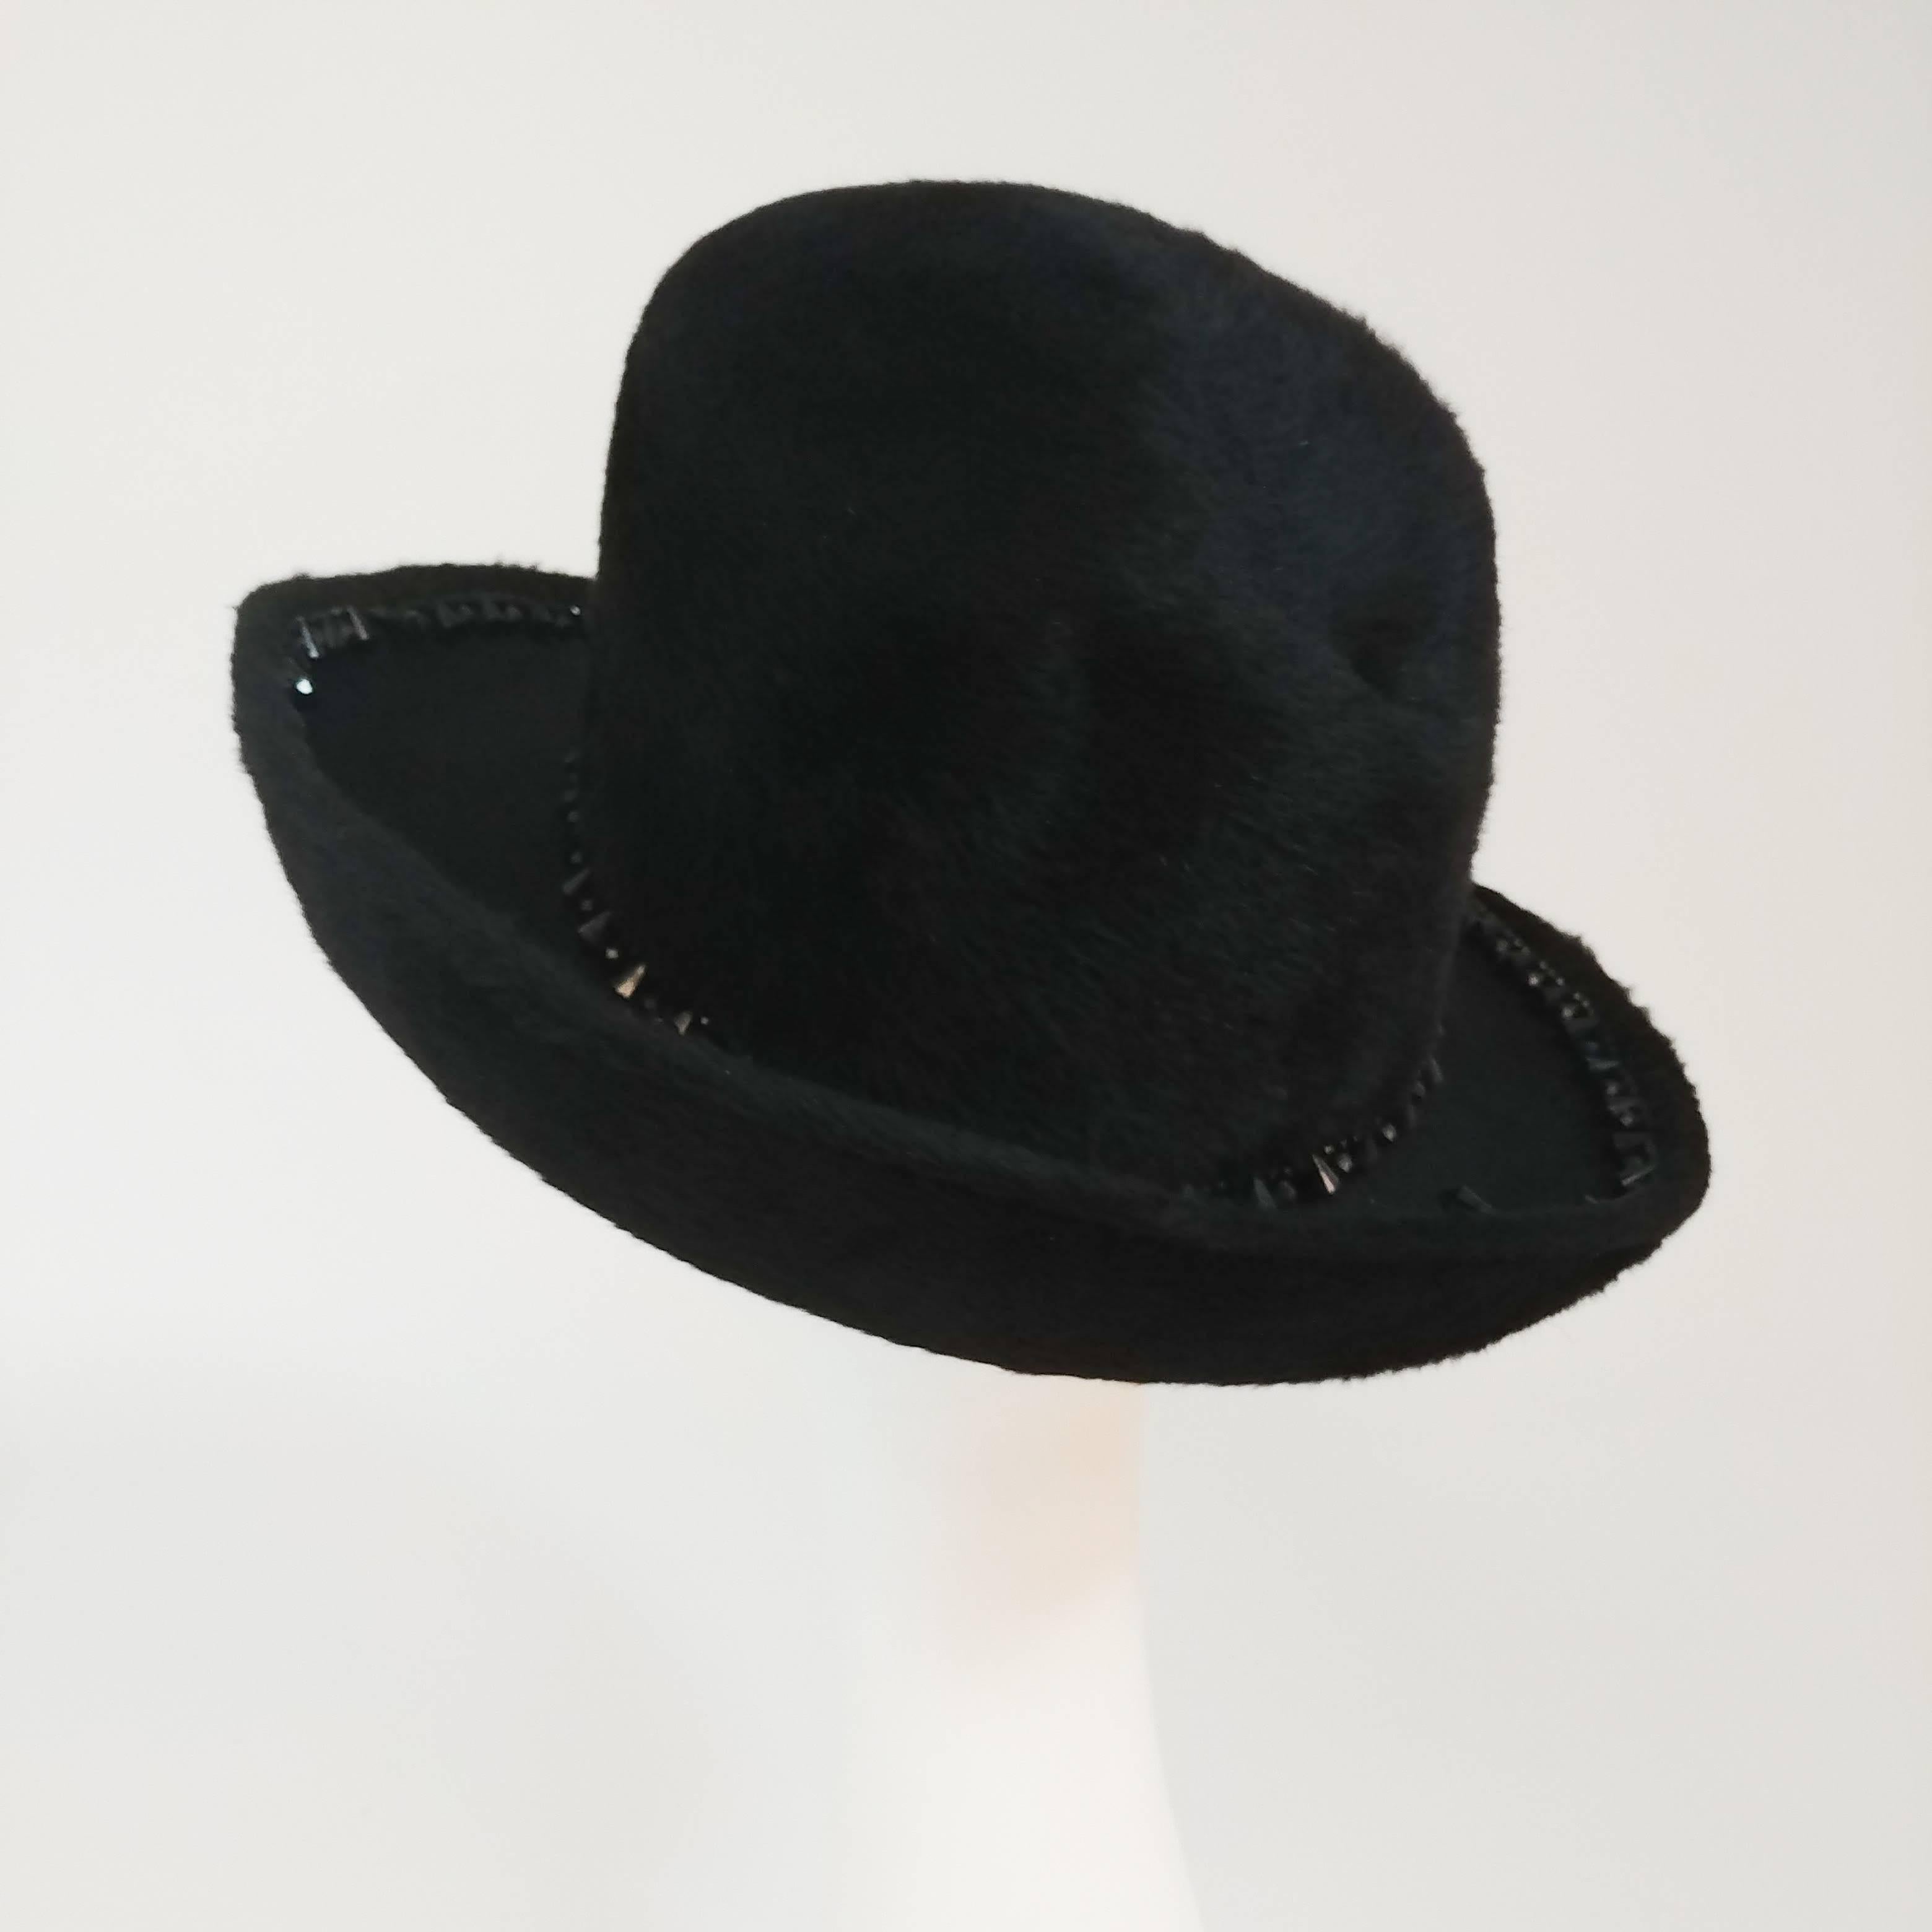 1960s Wide Brimmed Fur Felt Beaded Trim Hat. Tall crown, cocked brim, glass bead trim. 